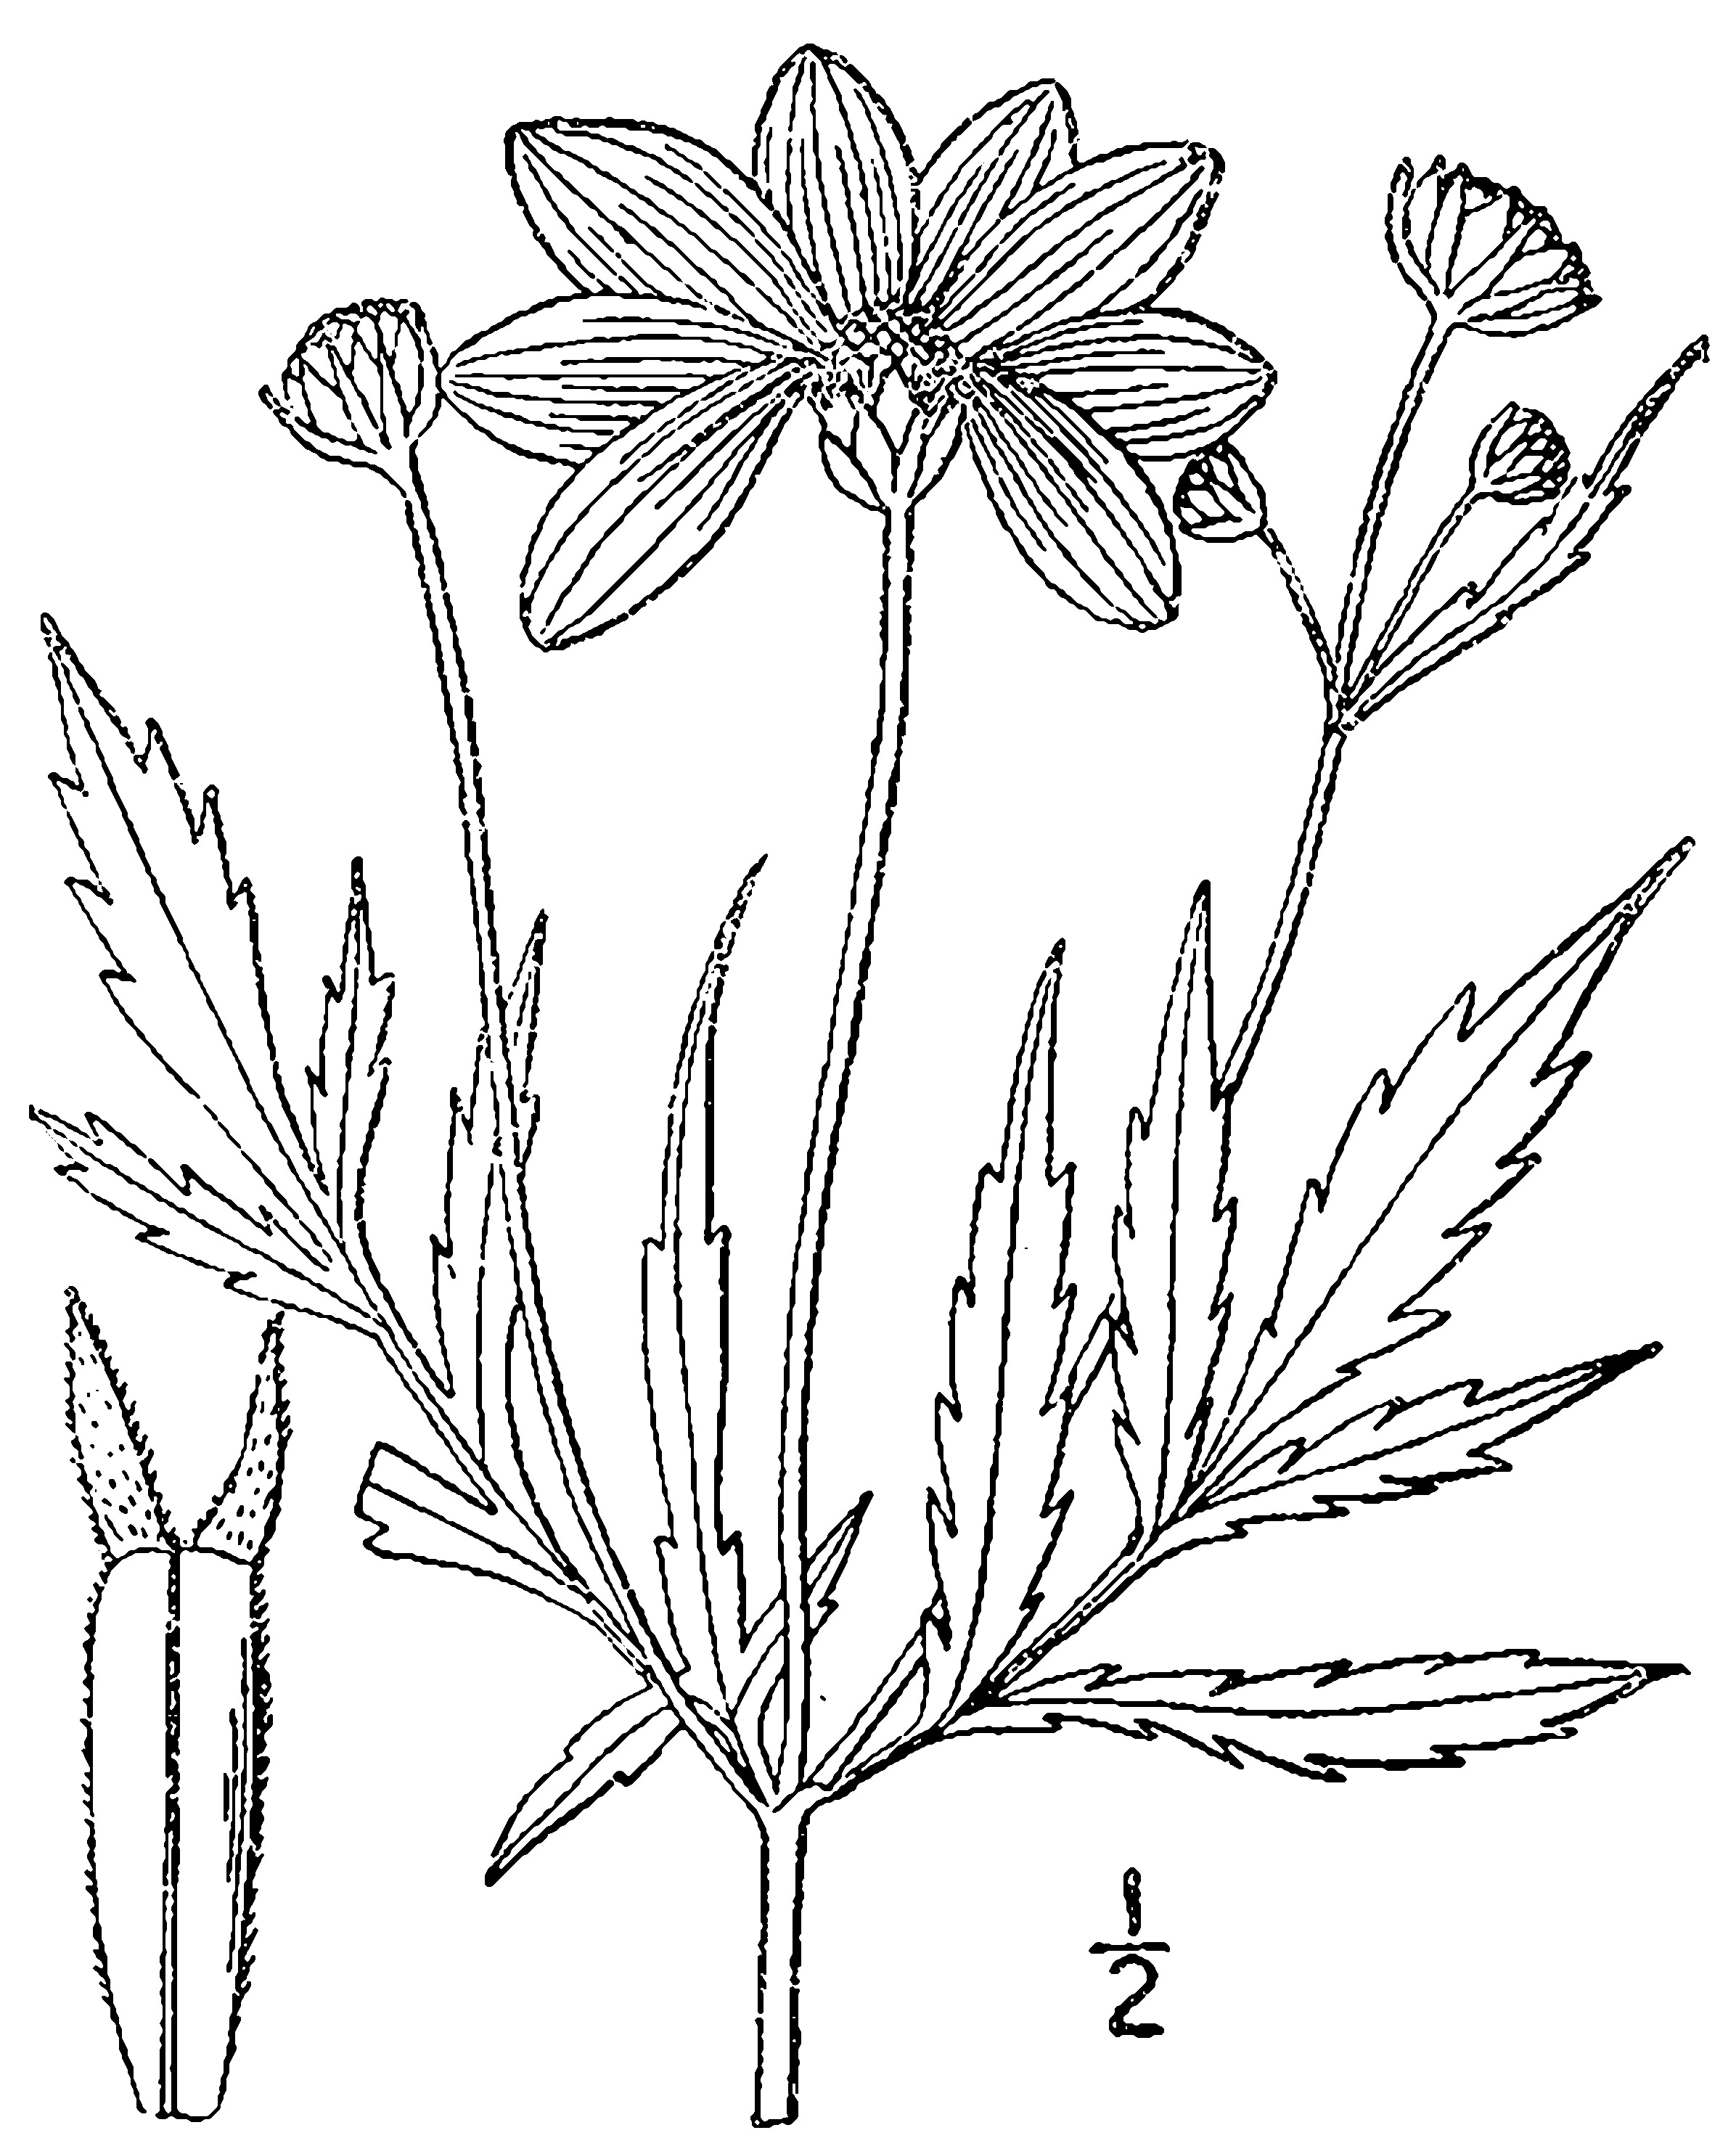 Crowned Beggarticks botanical illustration circa 1913.